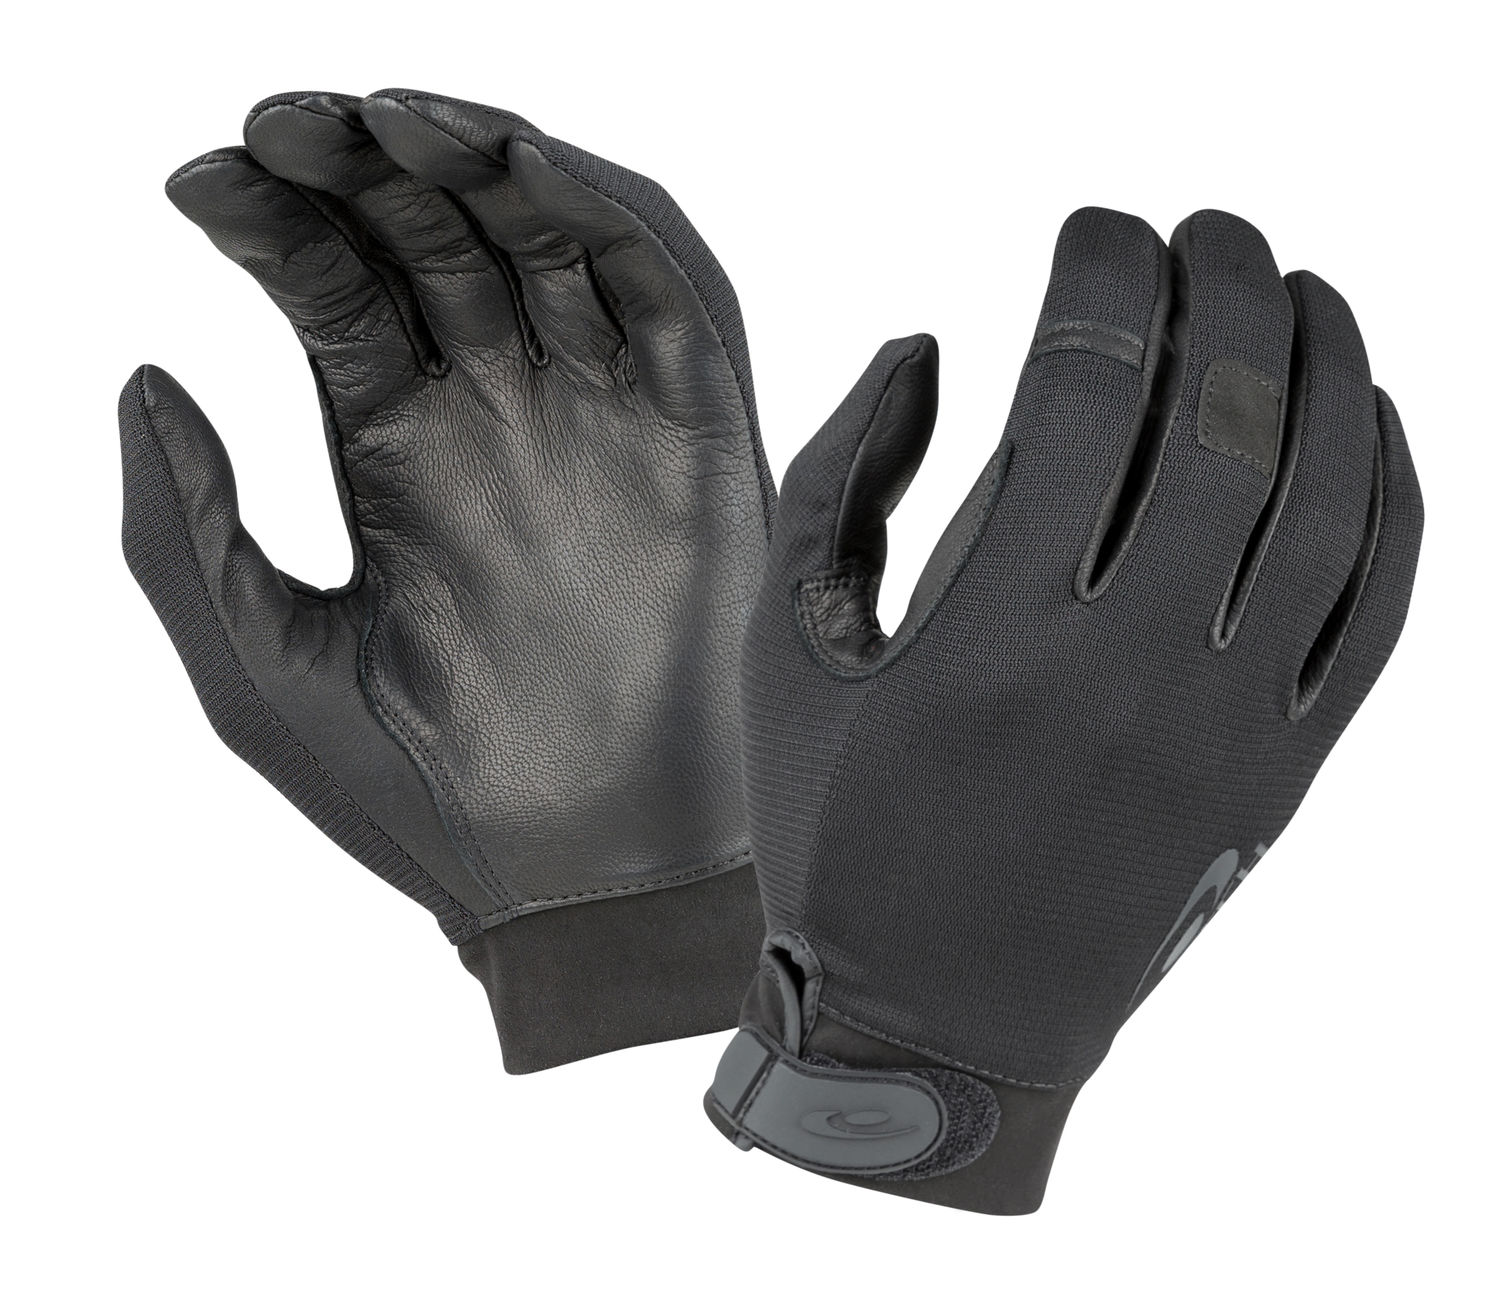 Model TSK323 Task Leather Light Glove - The Safariland Group